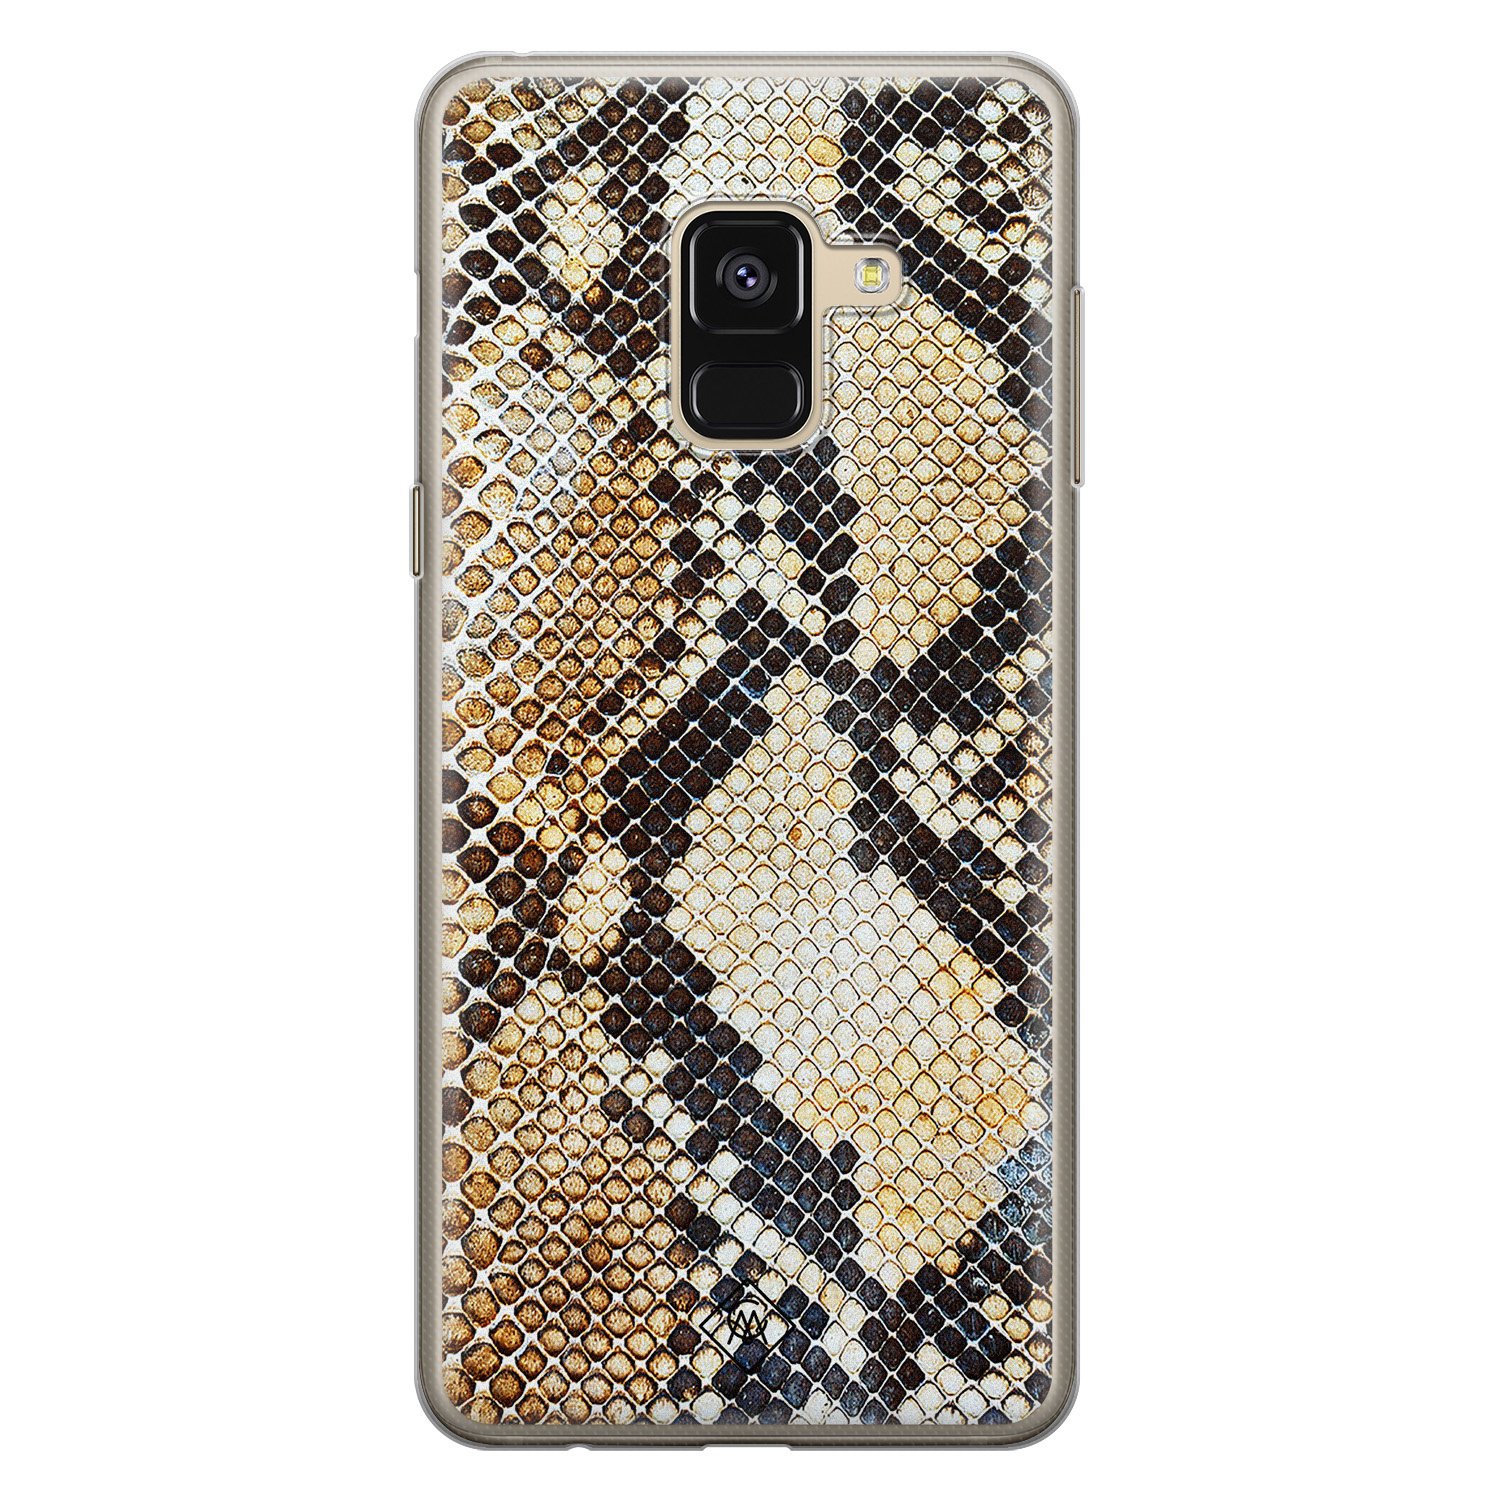 havik Postcode Zeestraat Samsung Galaxy A8 (2018) siliconen hoesje - Golden snake - Casimoda.nl